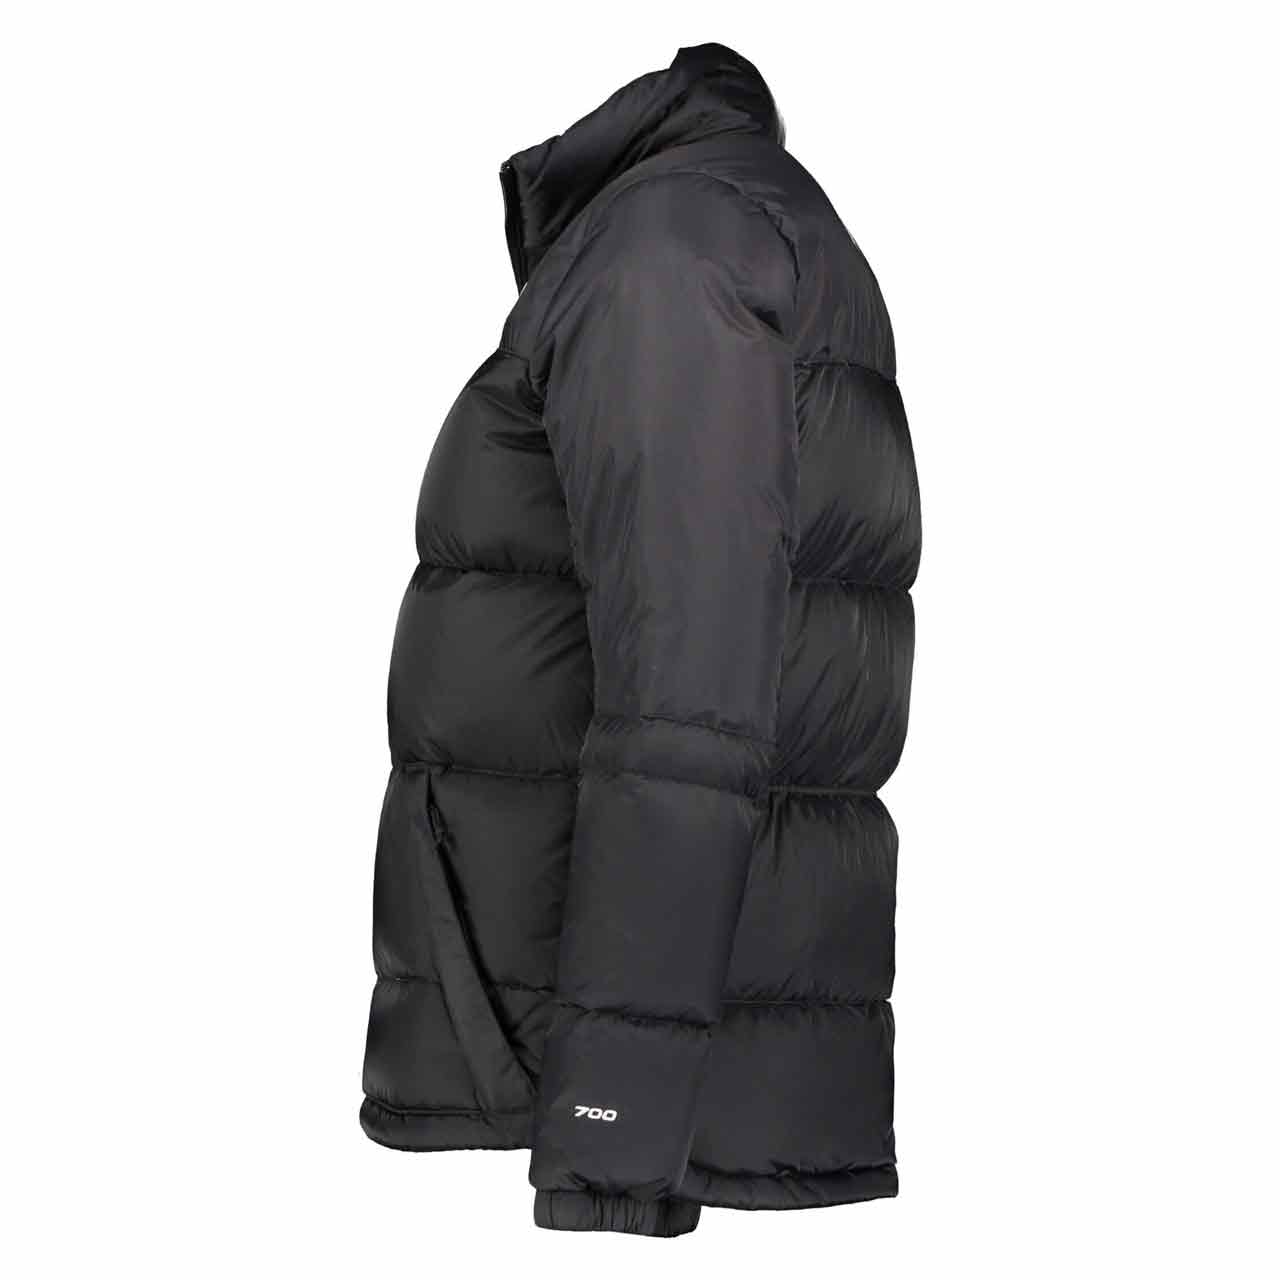 The North Face Damen Daunenjacke diablo down jacket kaufen